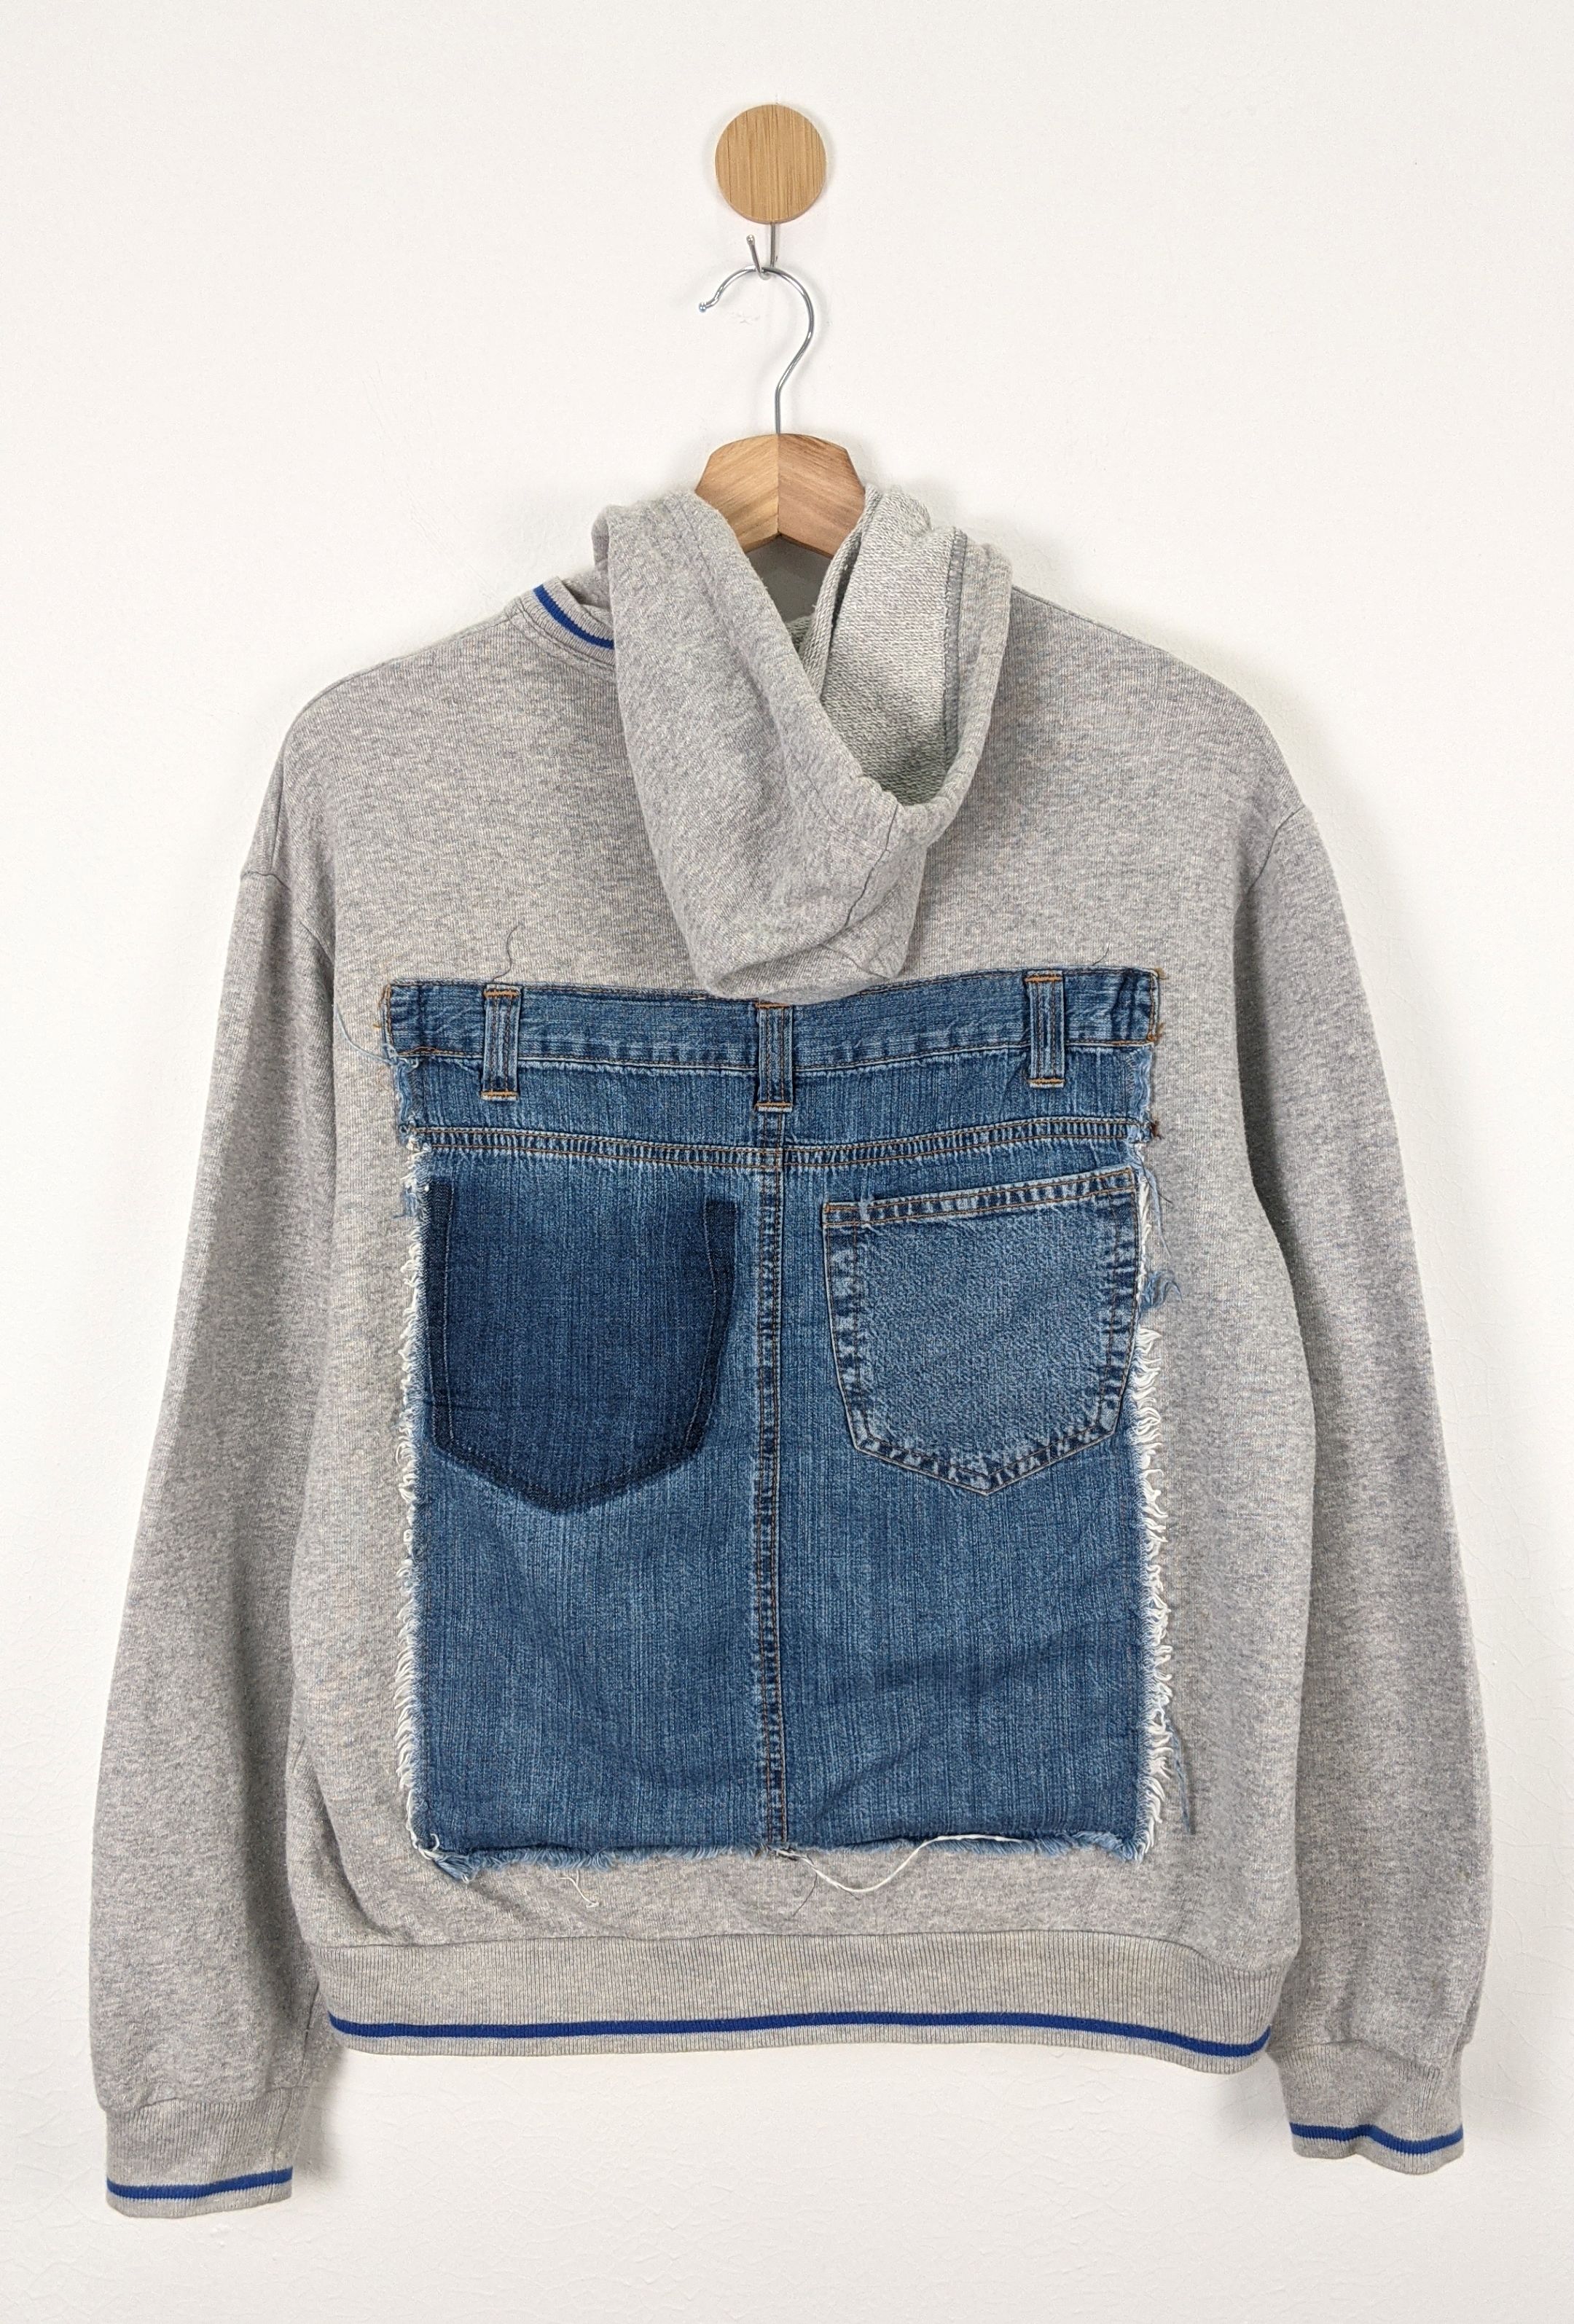 Dolce & Gabbana D&G Jeans denim Hoodie sweater - 2